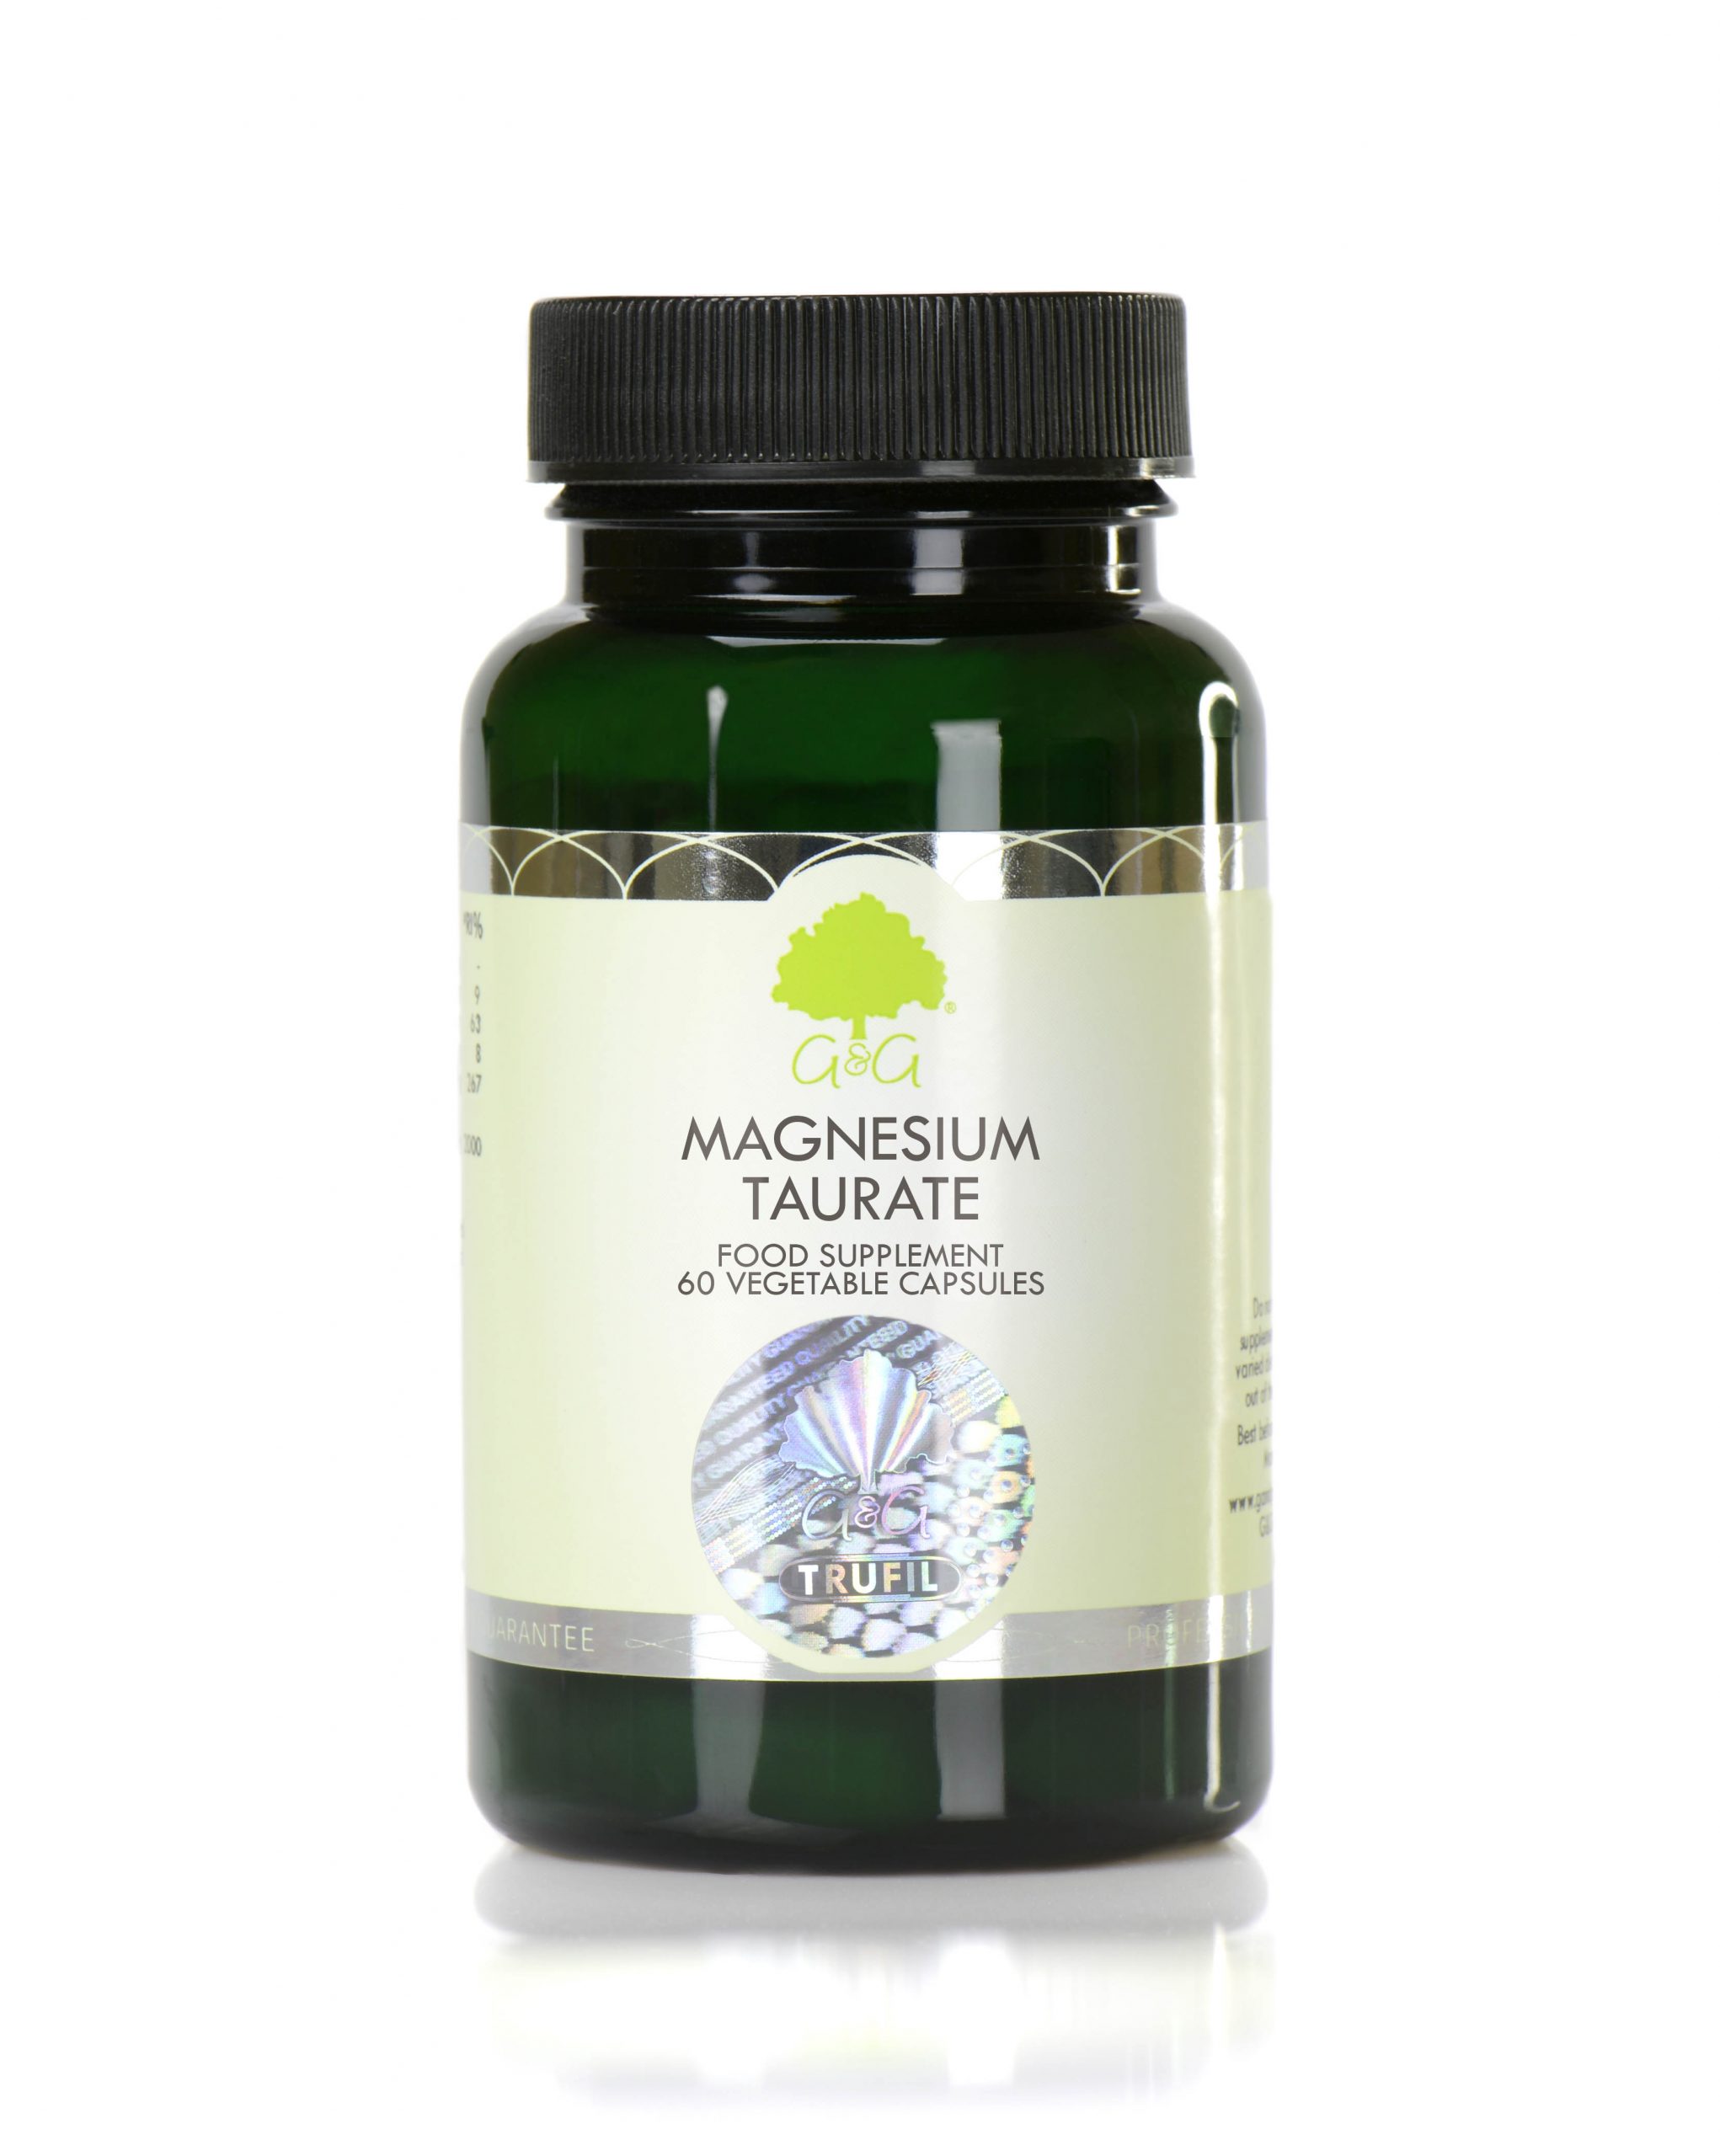 Magnesium Taurate 100mg, 60 capsules - G&G Vitamins